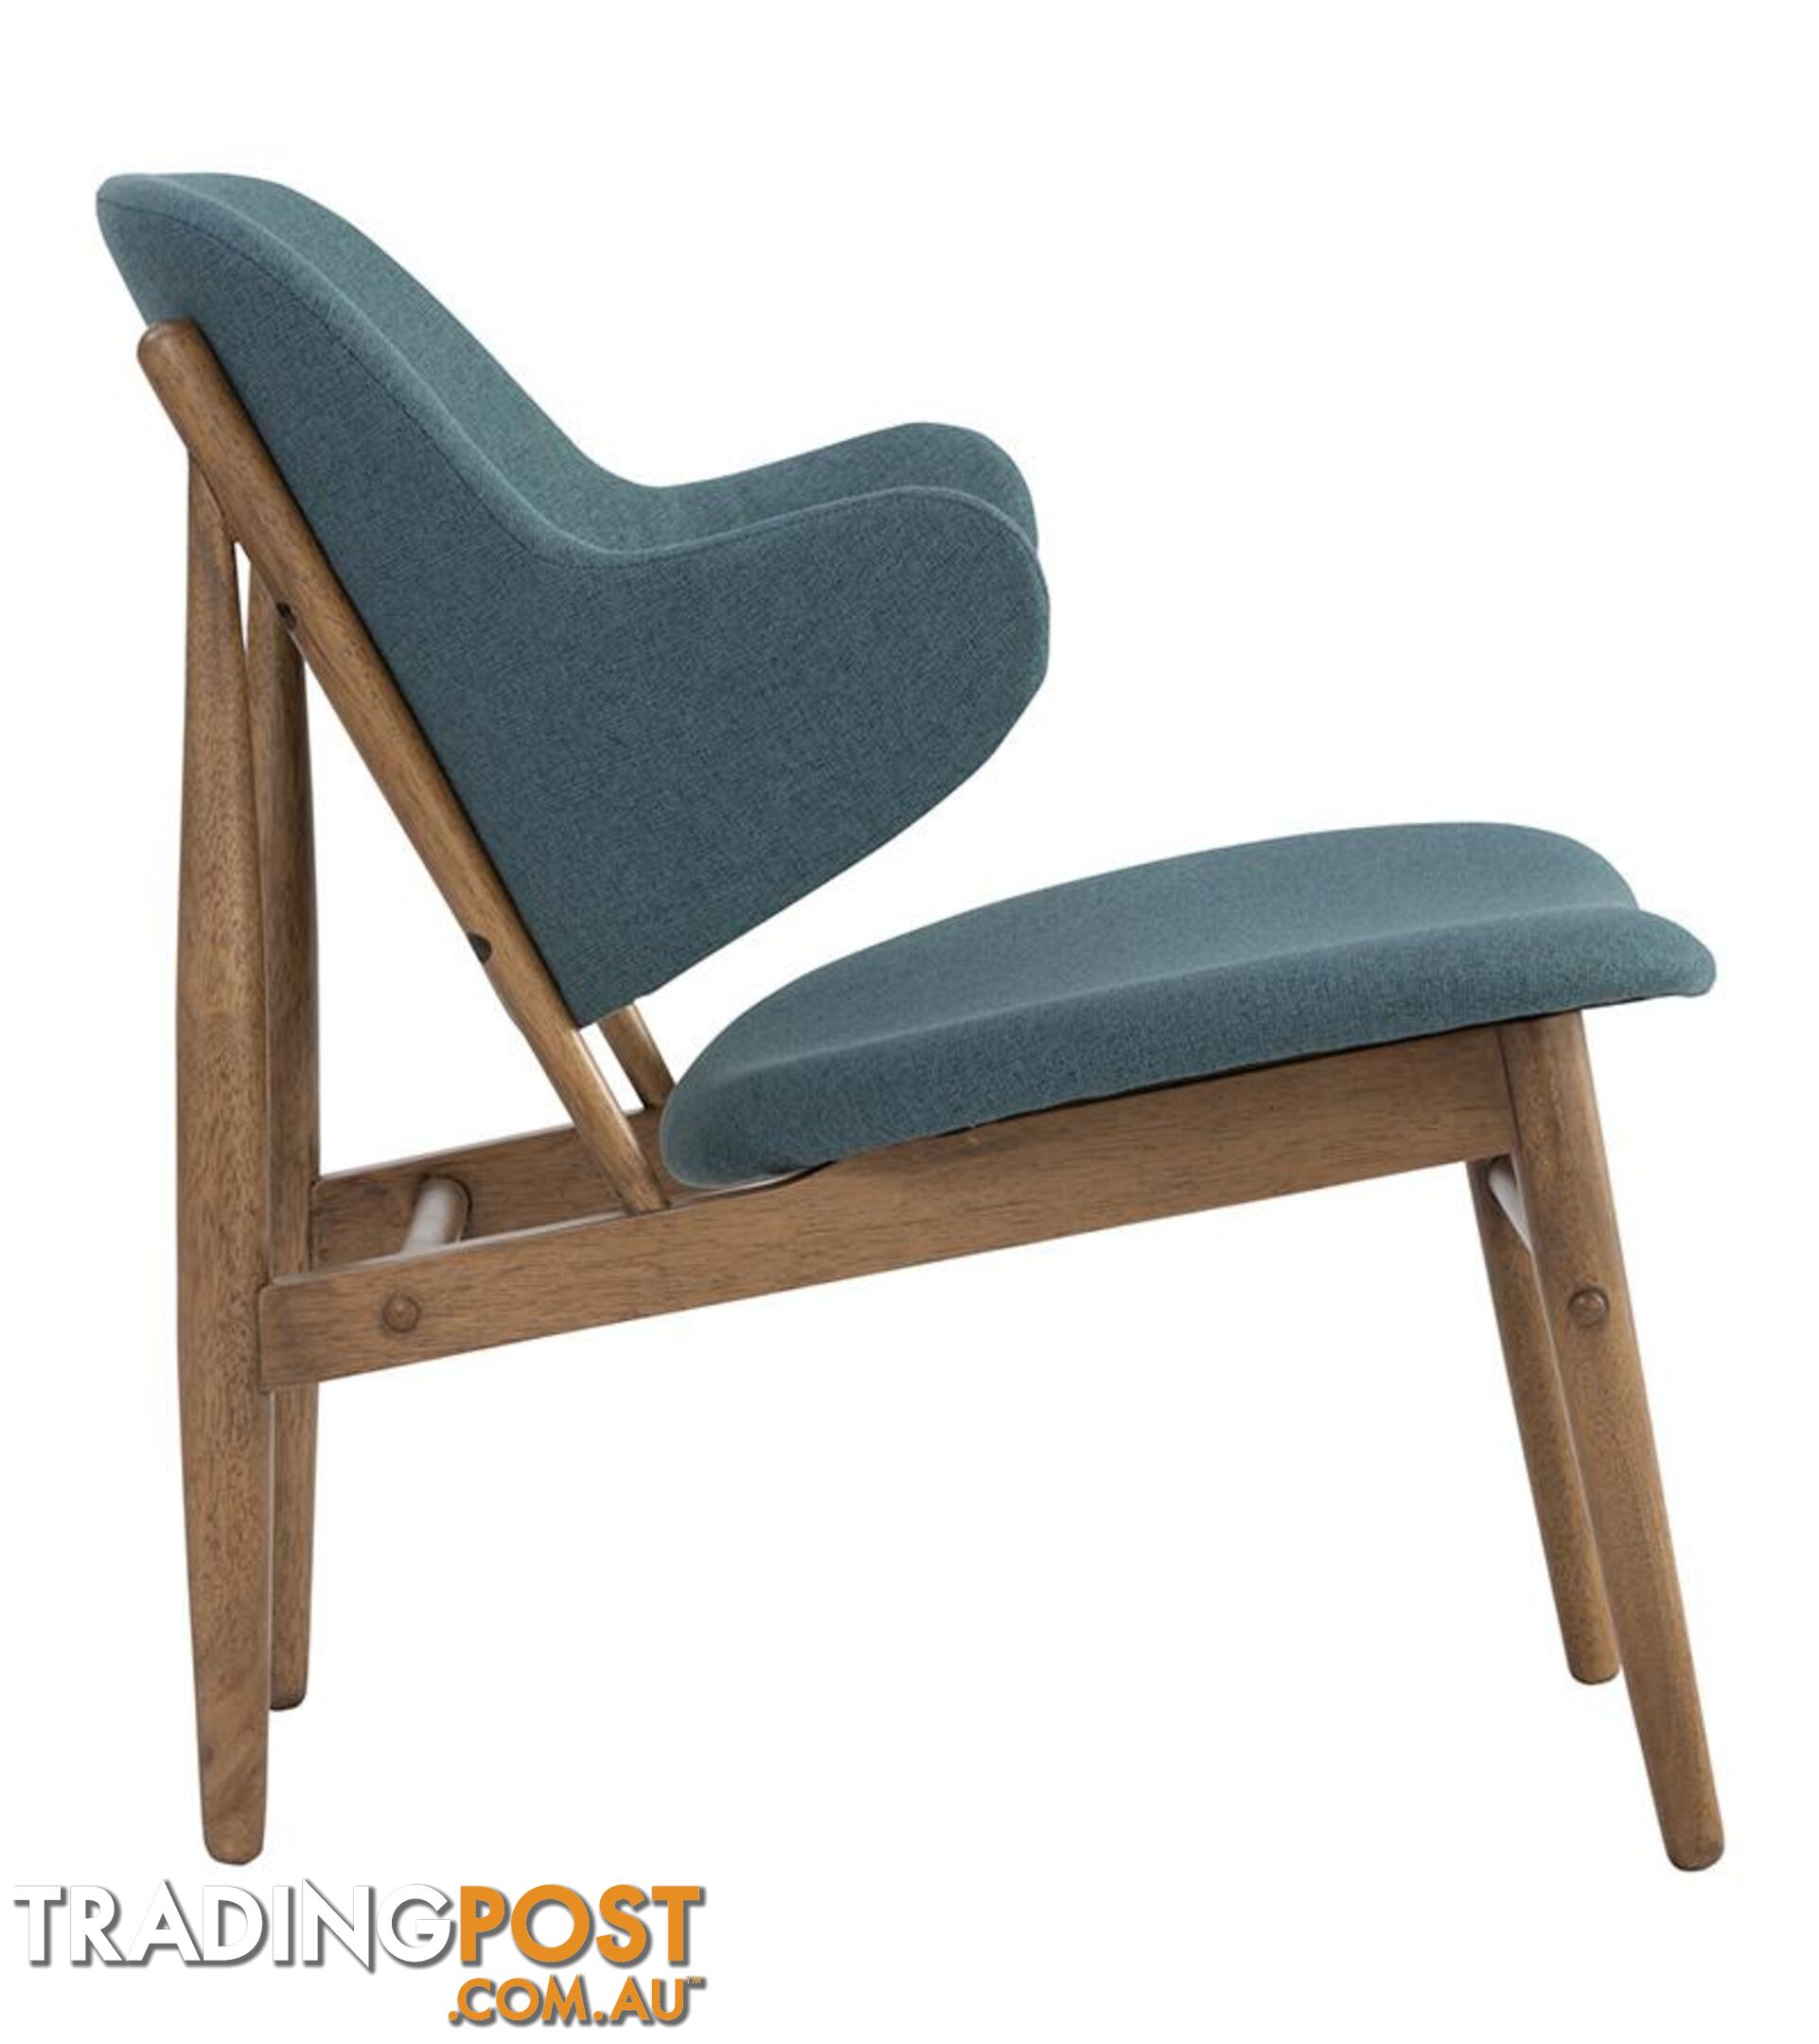 VERONIC Lounge Chair - Cocoa & Nile Green - 231247 - 9334719002200